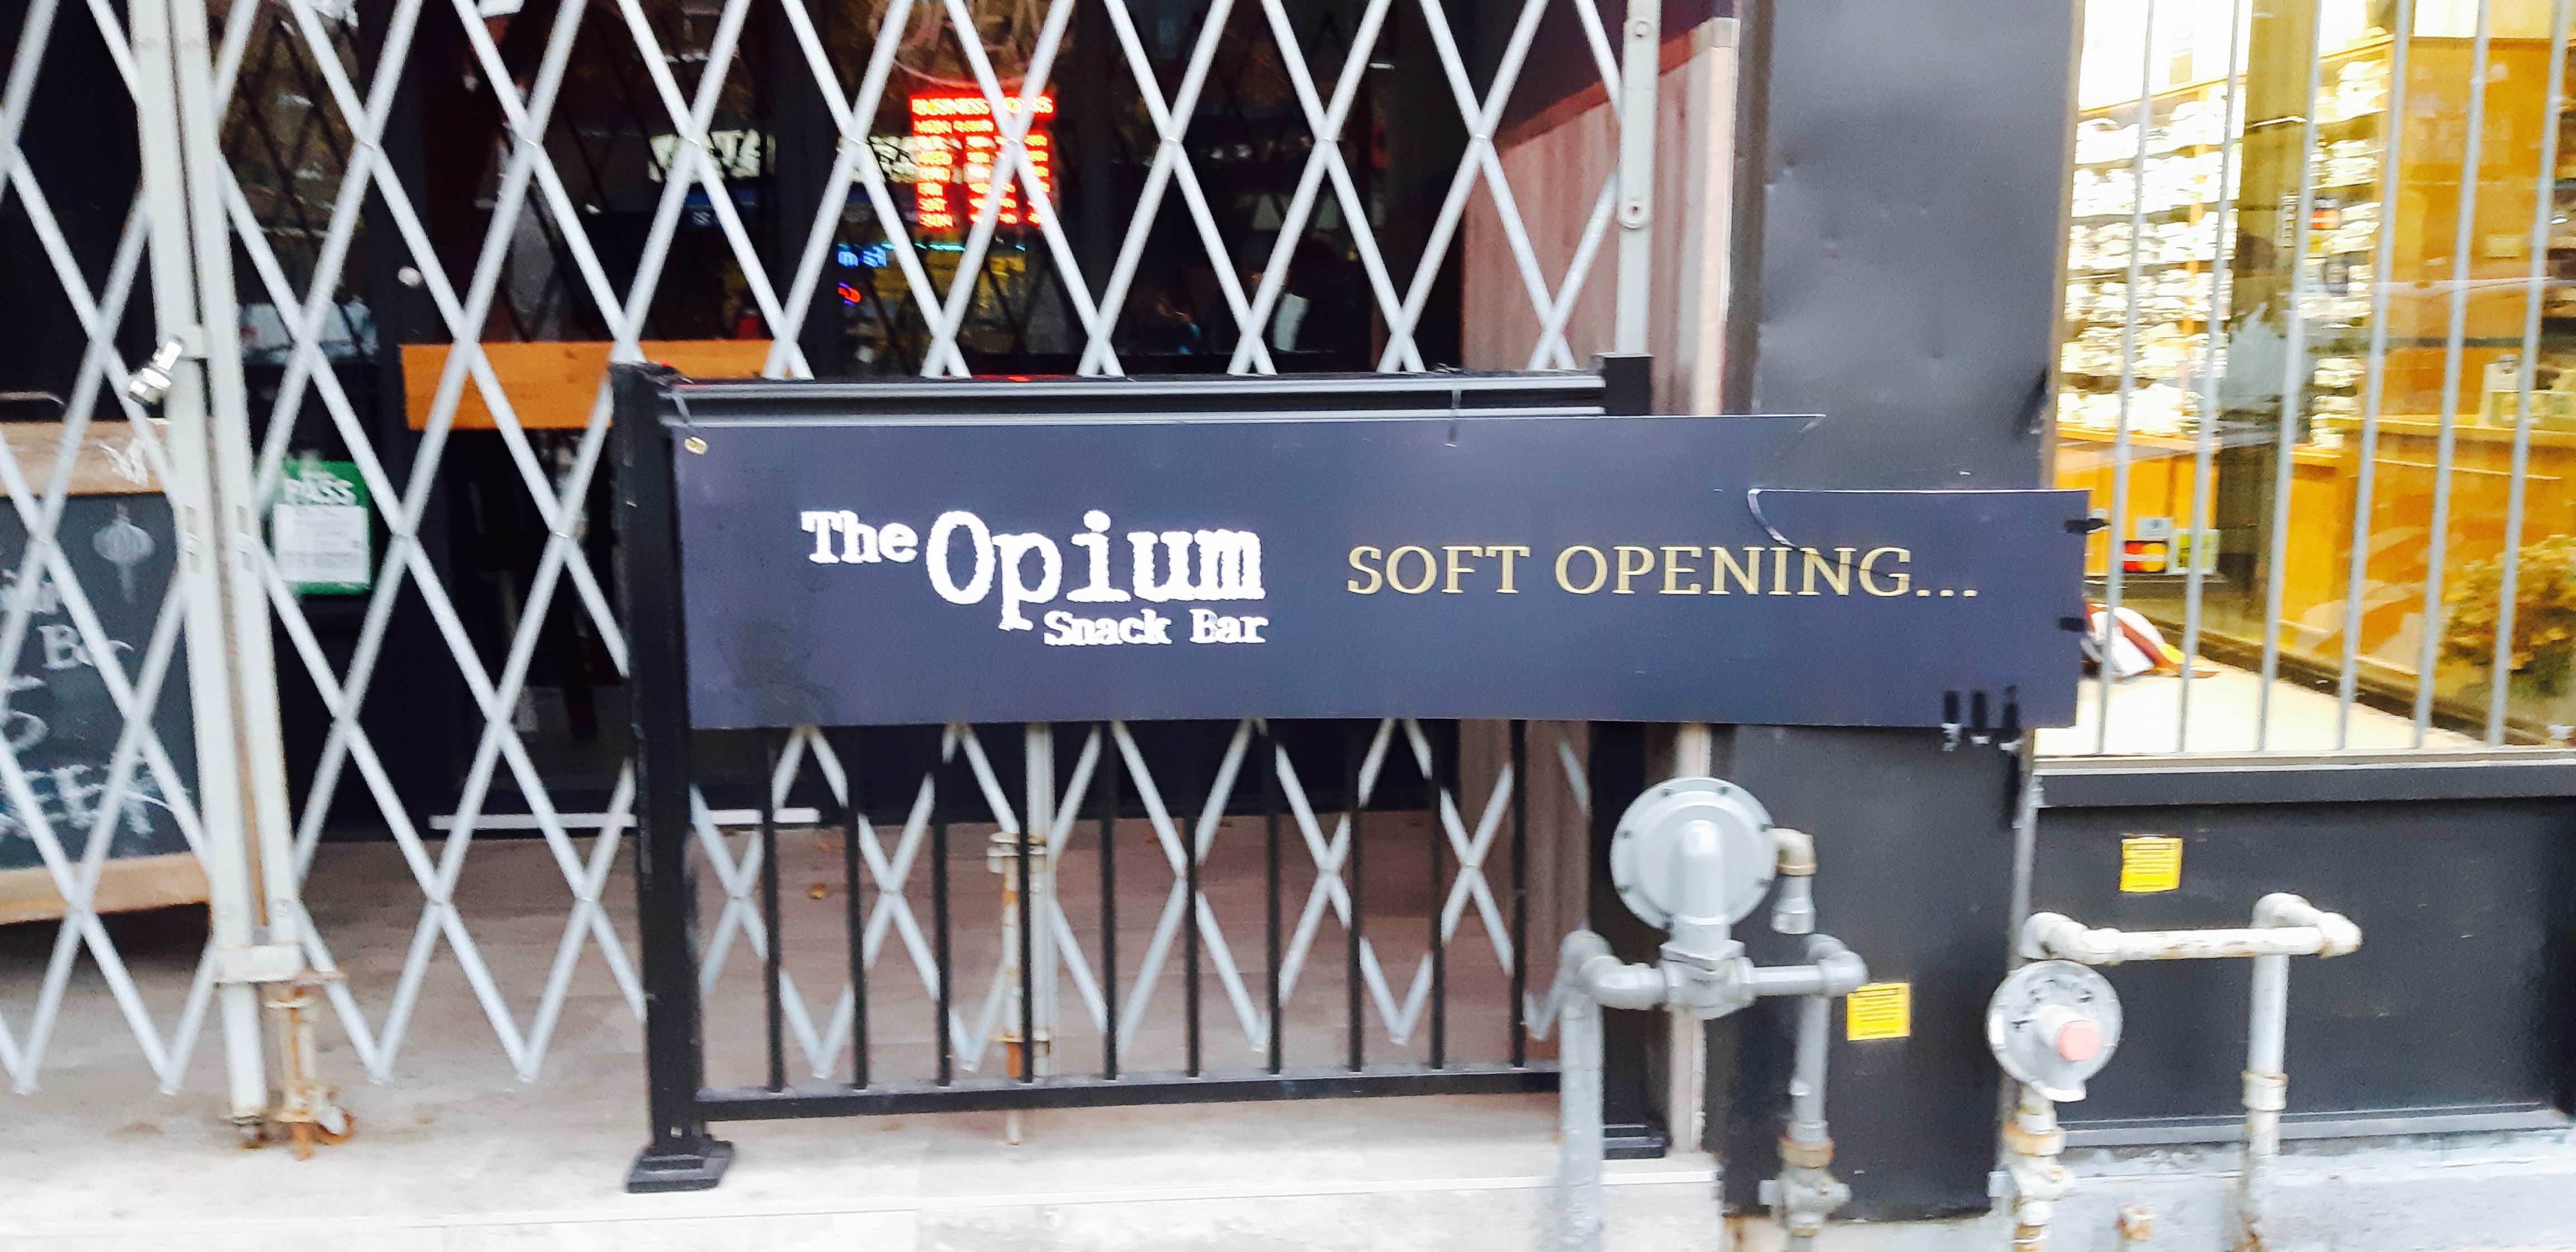 Opium Snack Bar soft opening